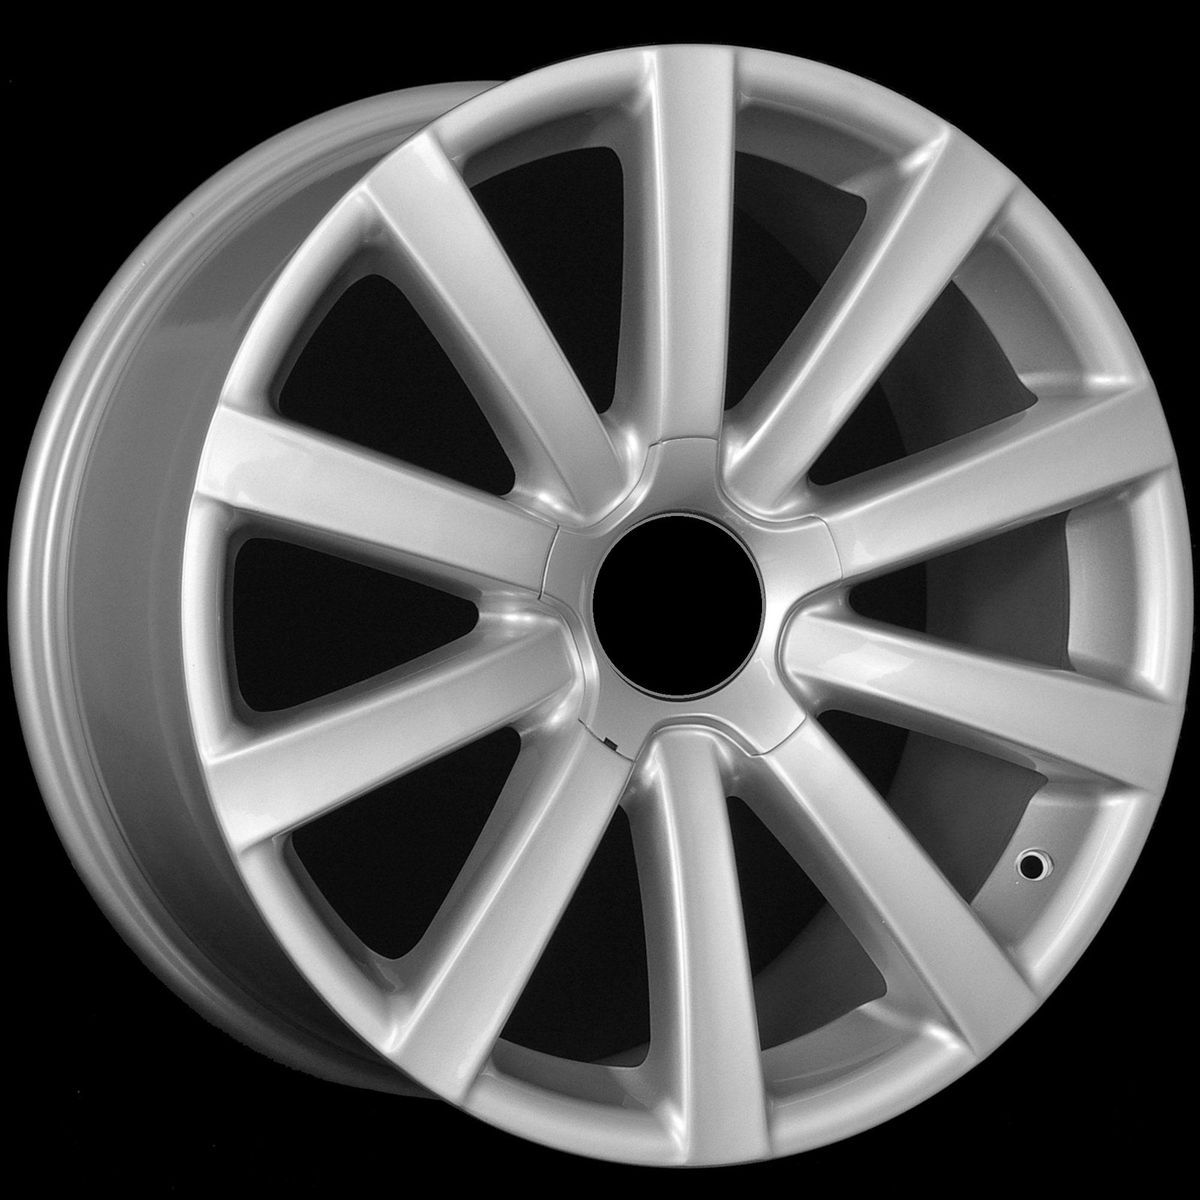 18 VW R32 Style Silver Wheels Rims Fit Audi A3 A6 TT MKII